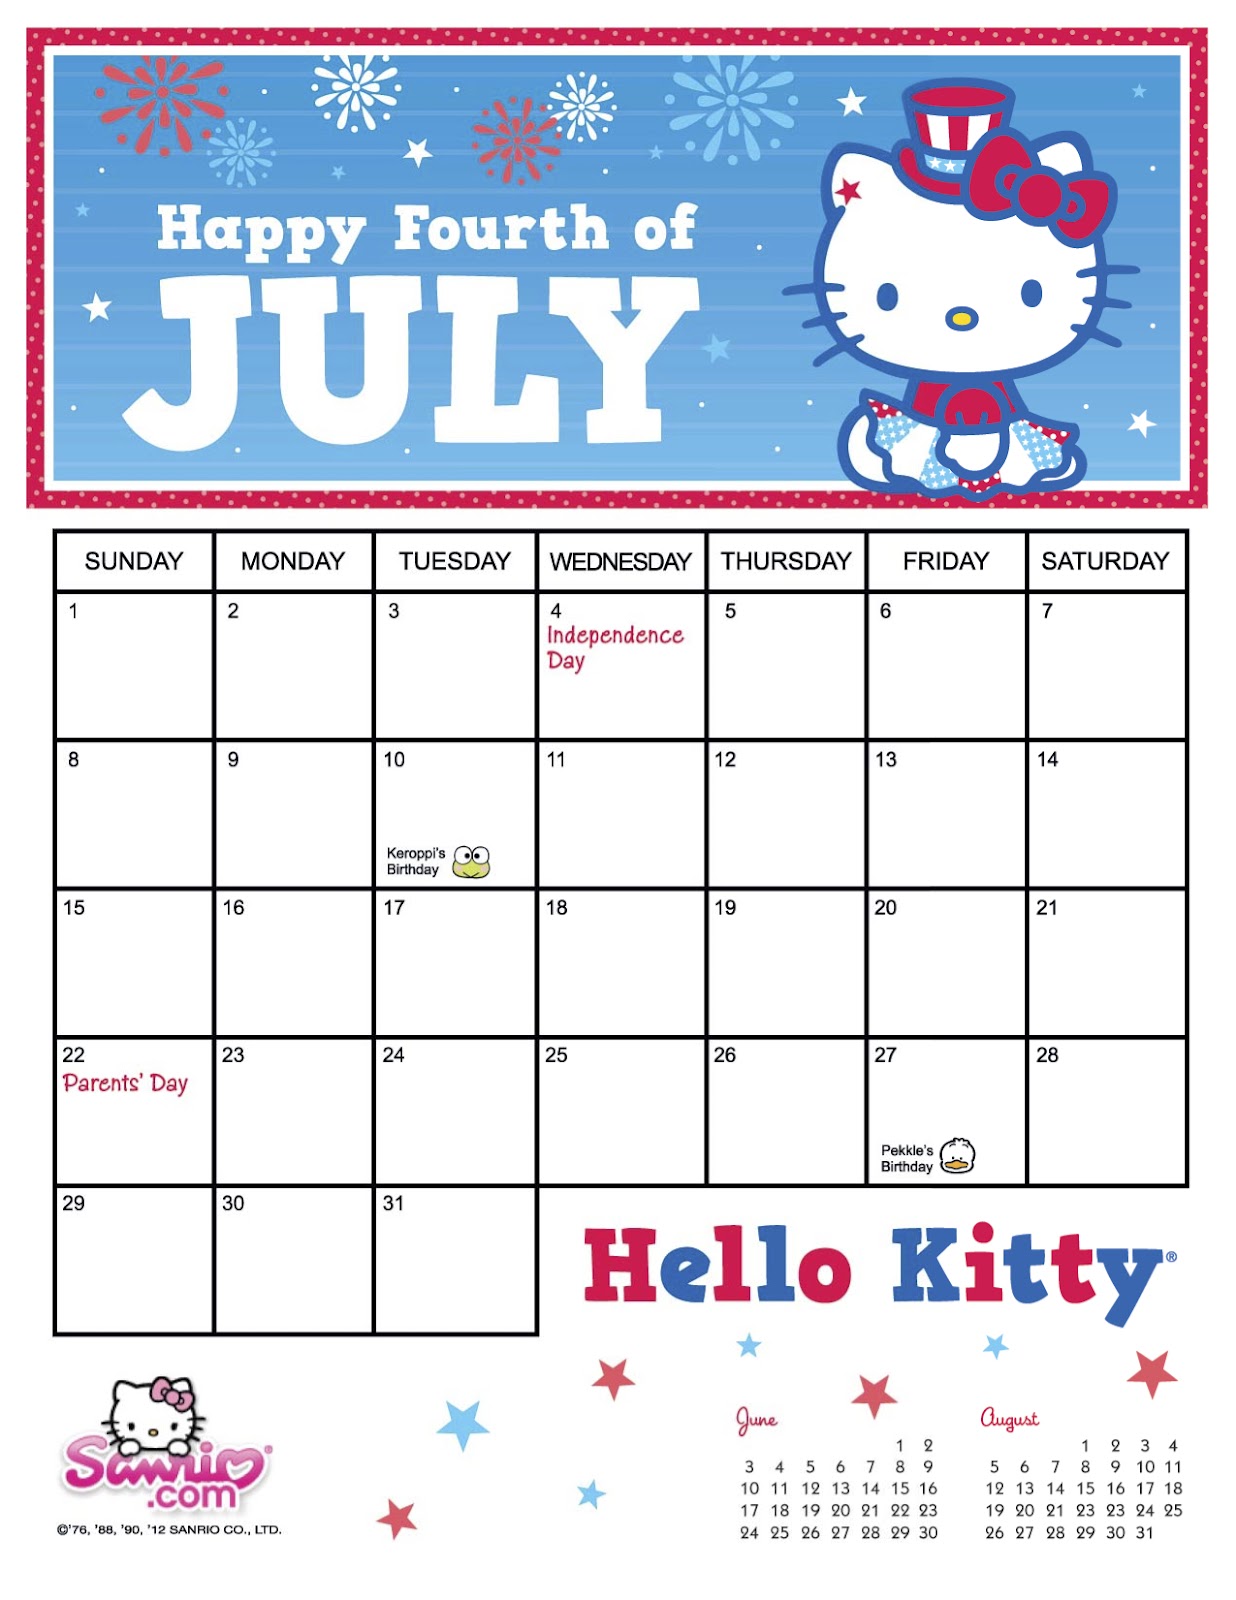 hello-kitty-loft-july-2012-hello-kitty-calendar